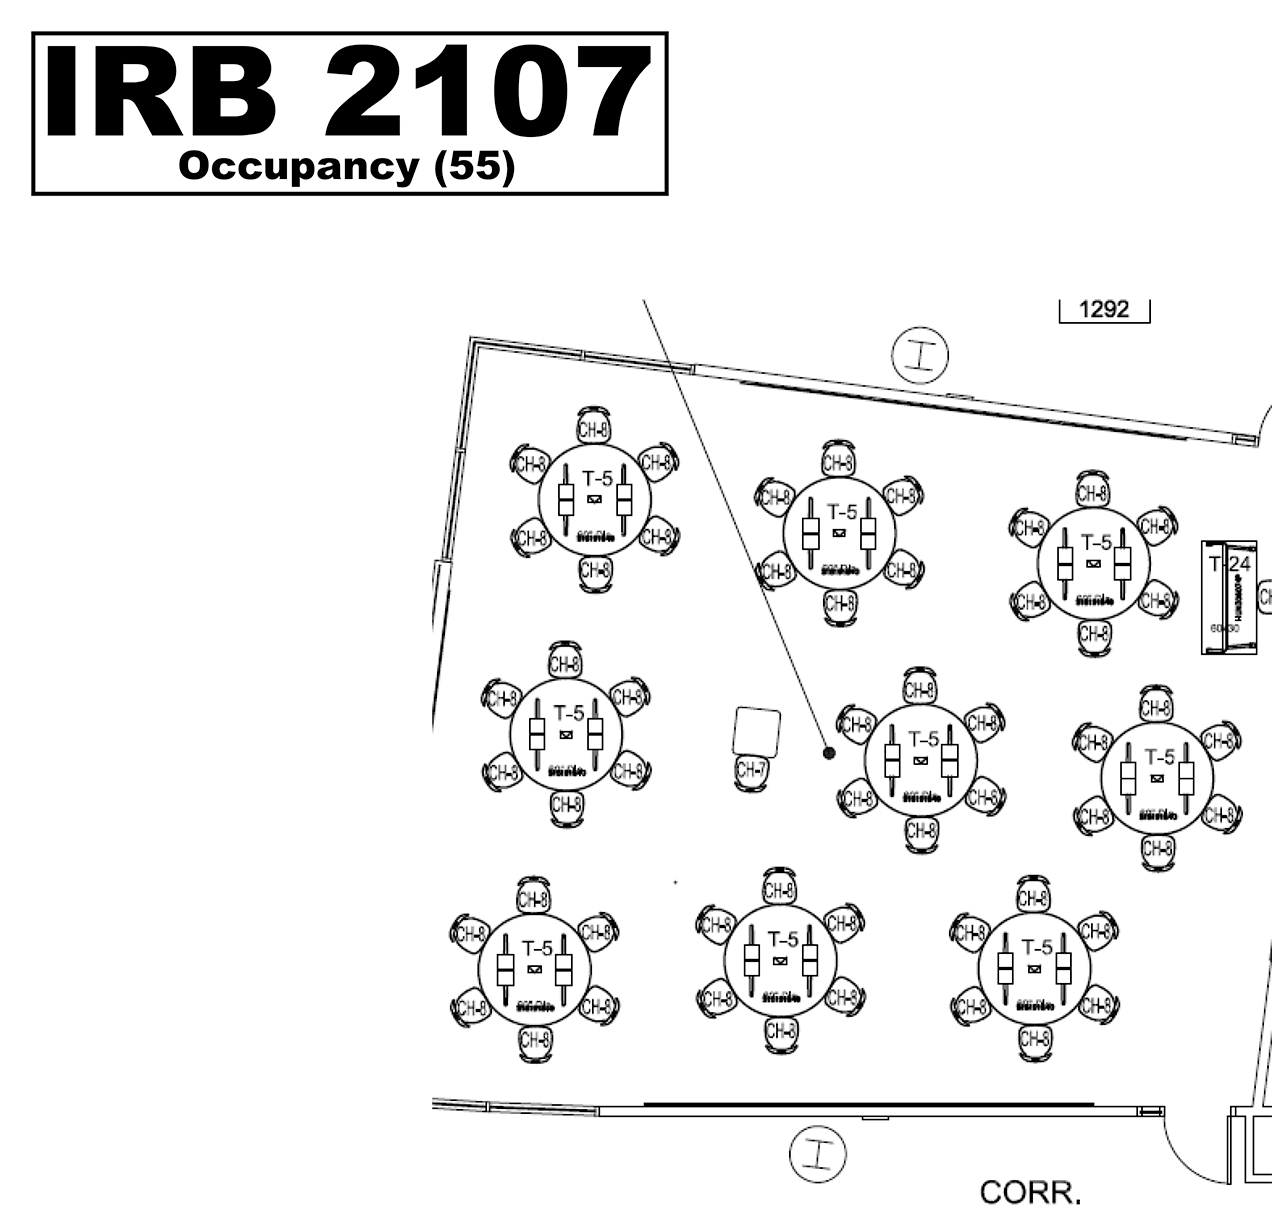 IRB2107 floorplan